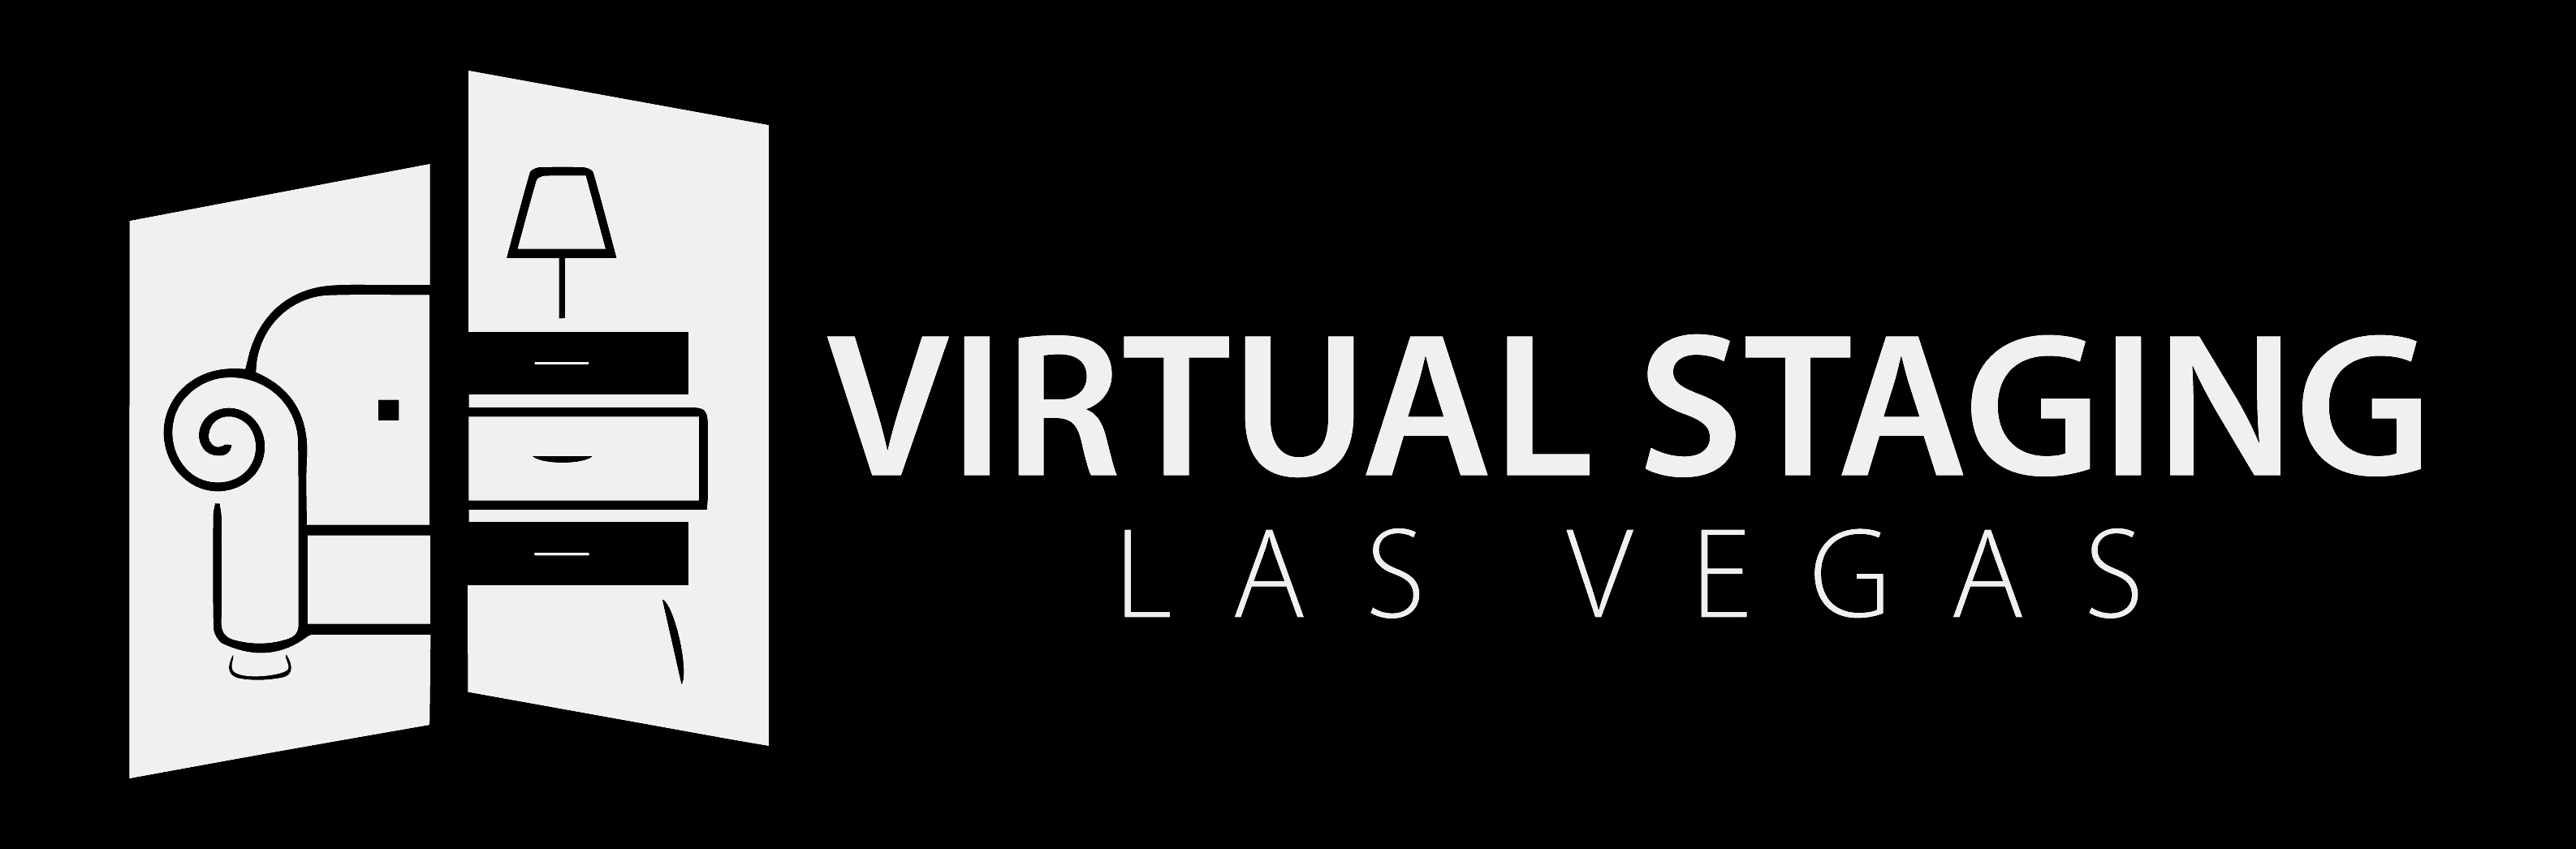 virtual staging las vegas inverted